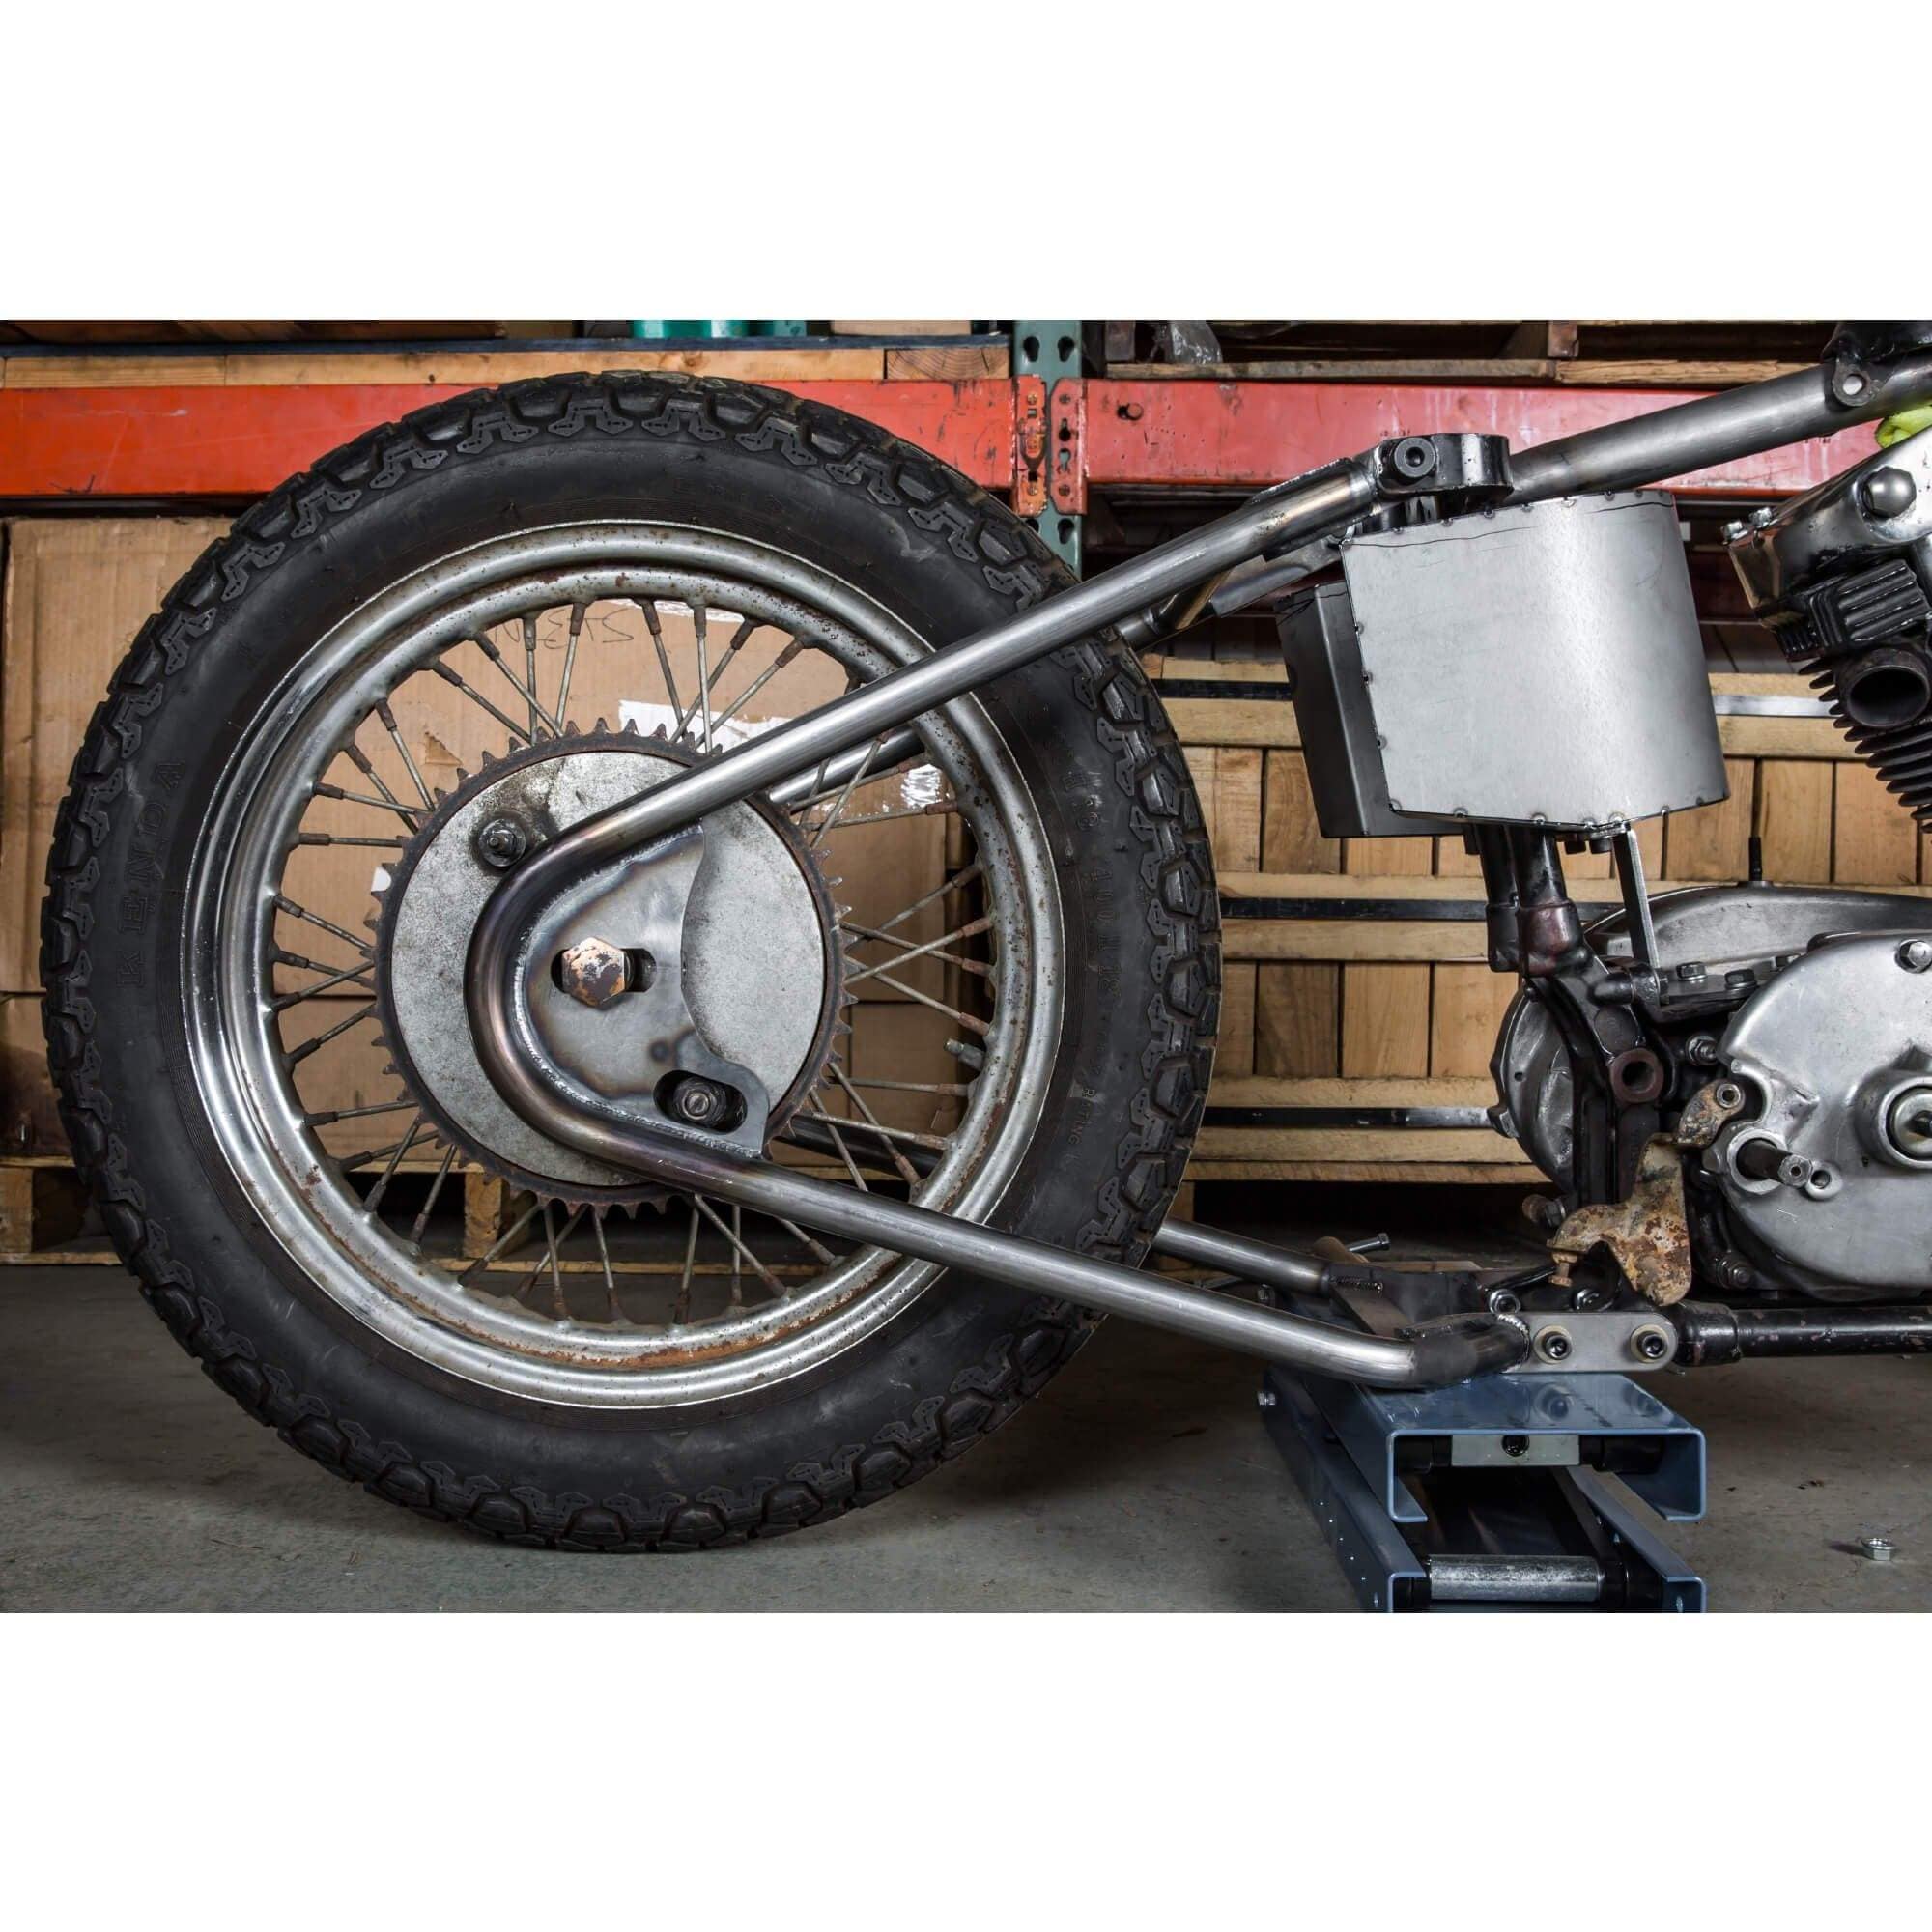 1972 Ironhead Harley Sportster Chopper – Purpose Built Moto